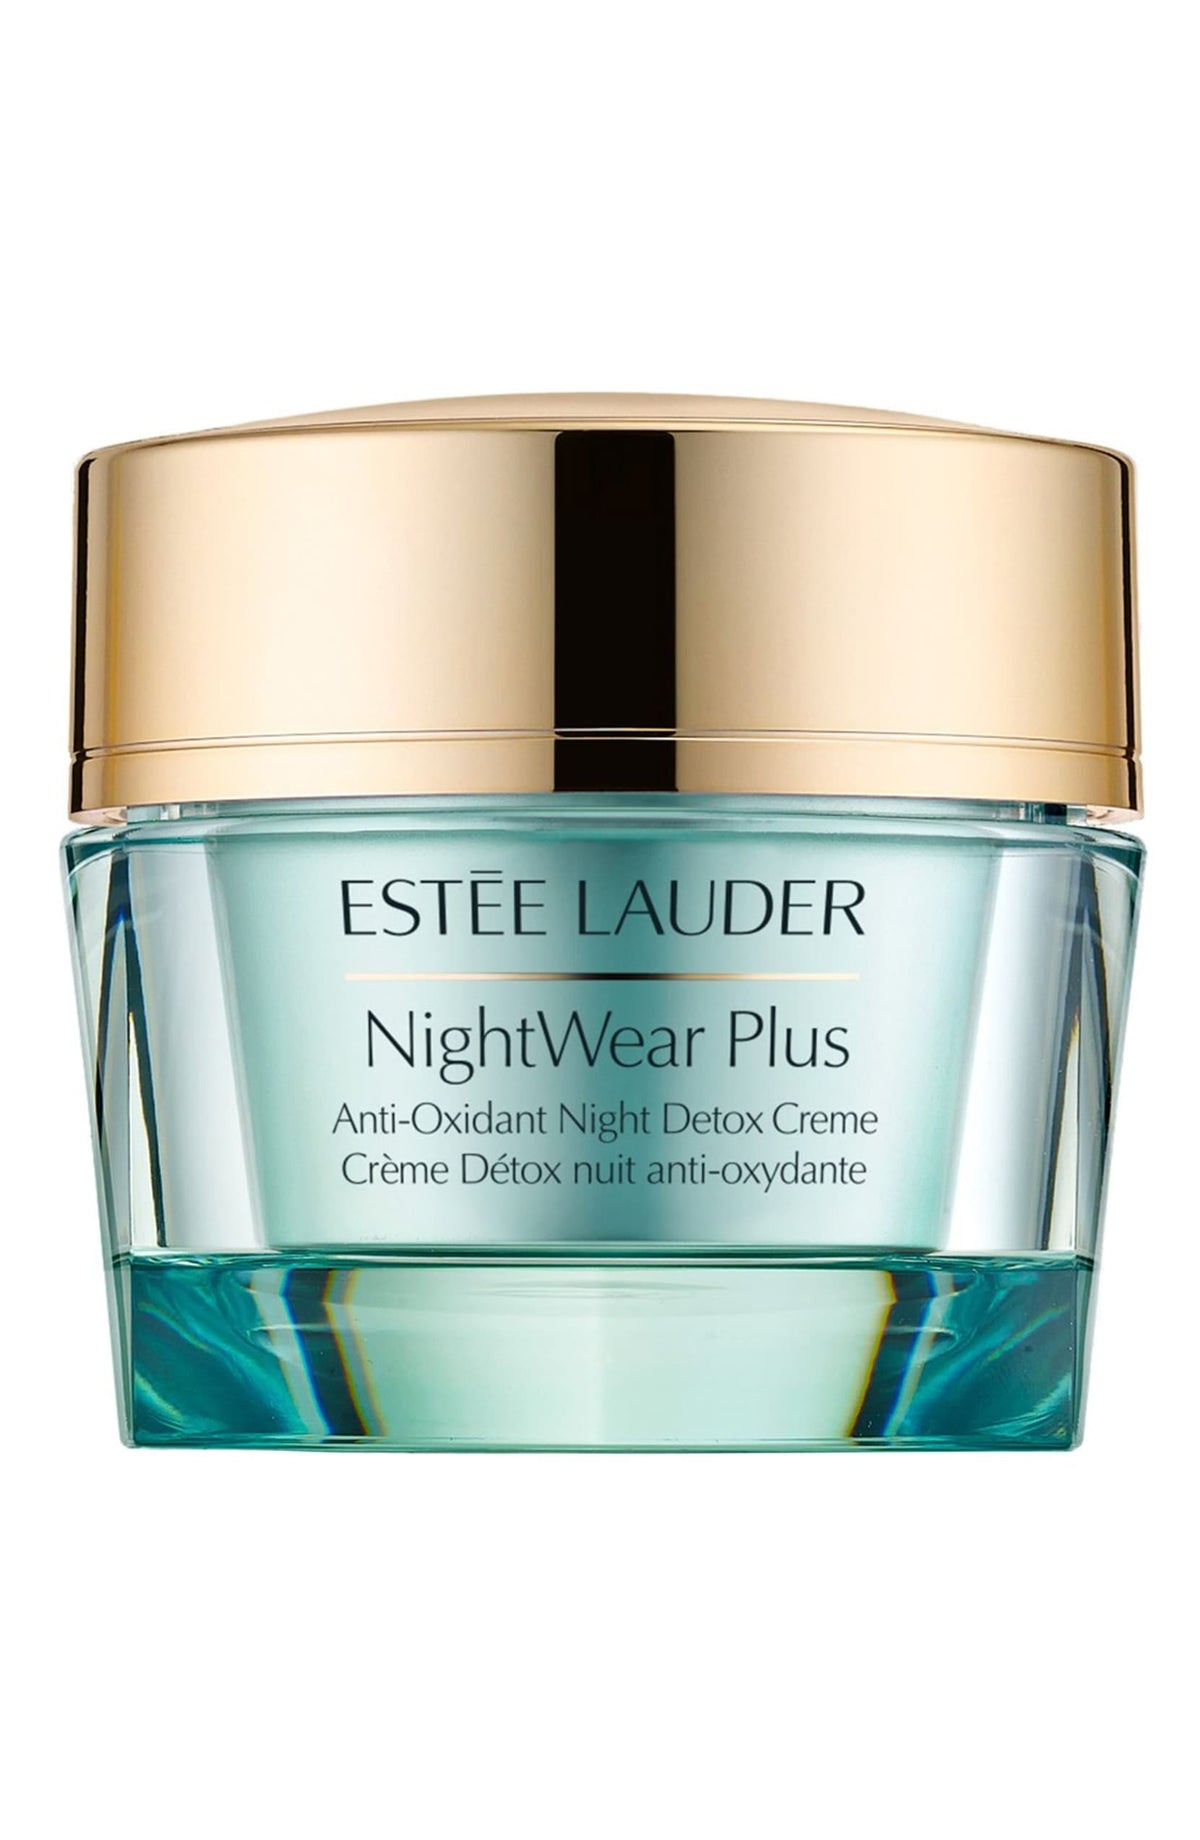 Estee Lauder NightWear Plus Anti-Oxidant Night Detox Creme